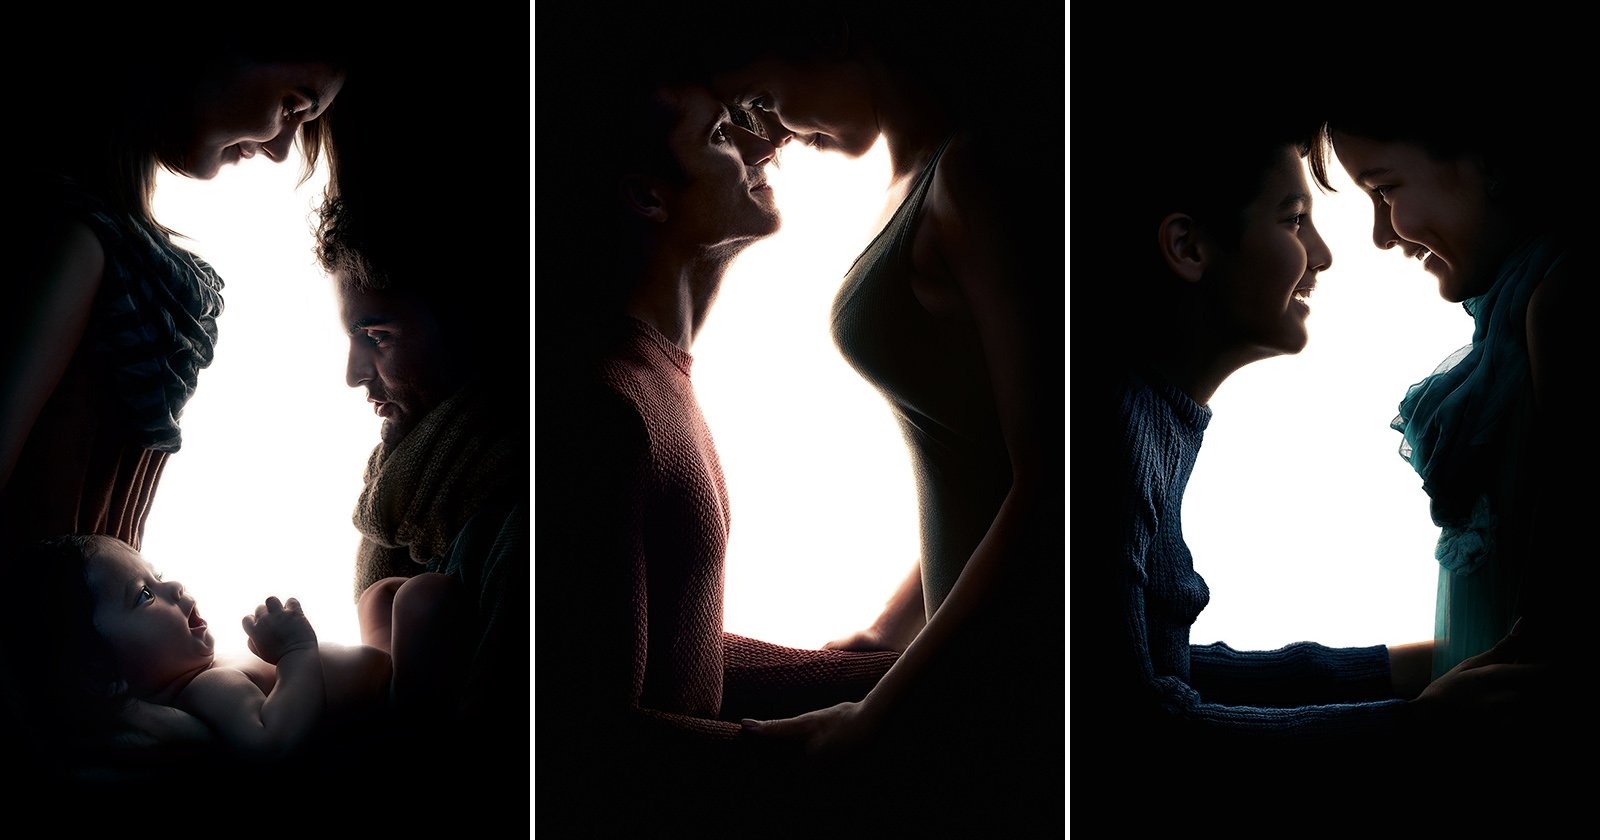 These Creative Photos Use Optical Illusions to Promote Pet Adoption